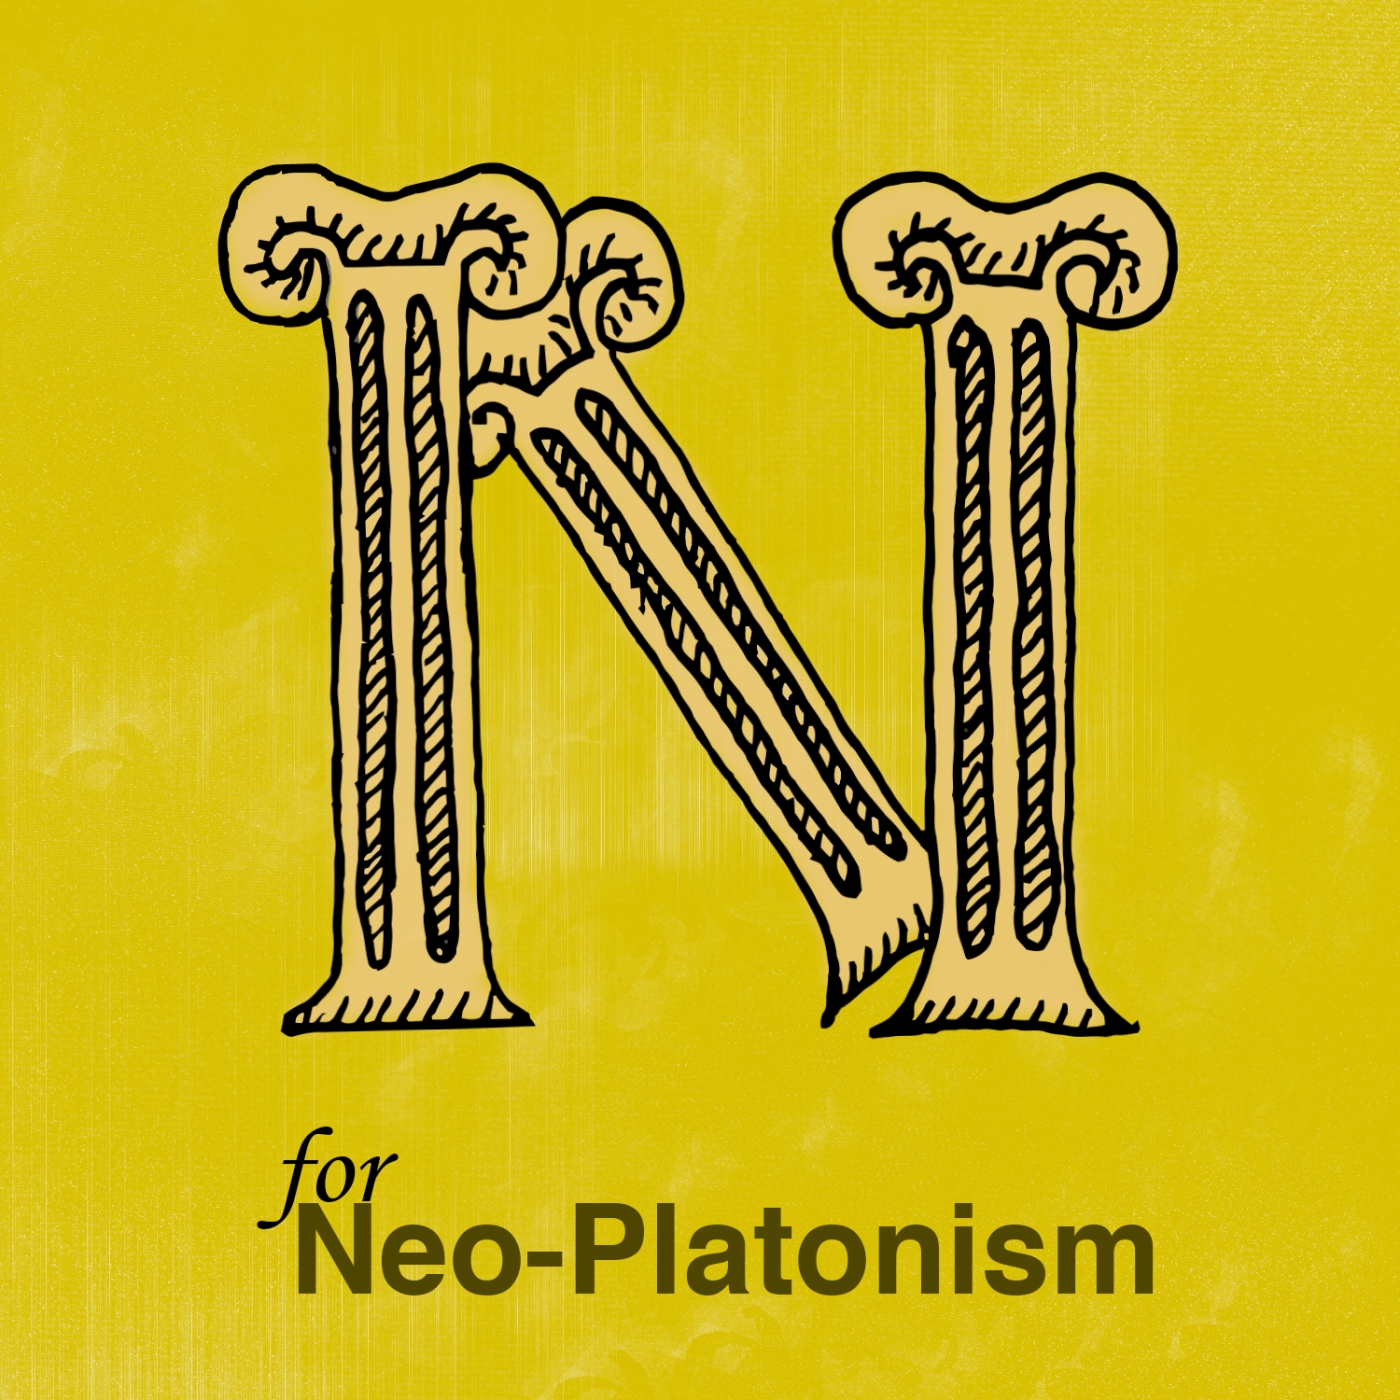 neoplatonic thought